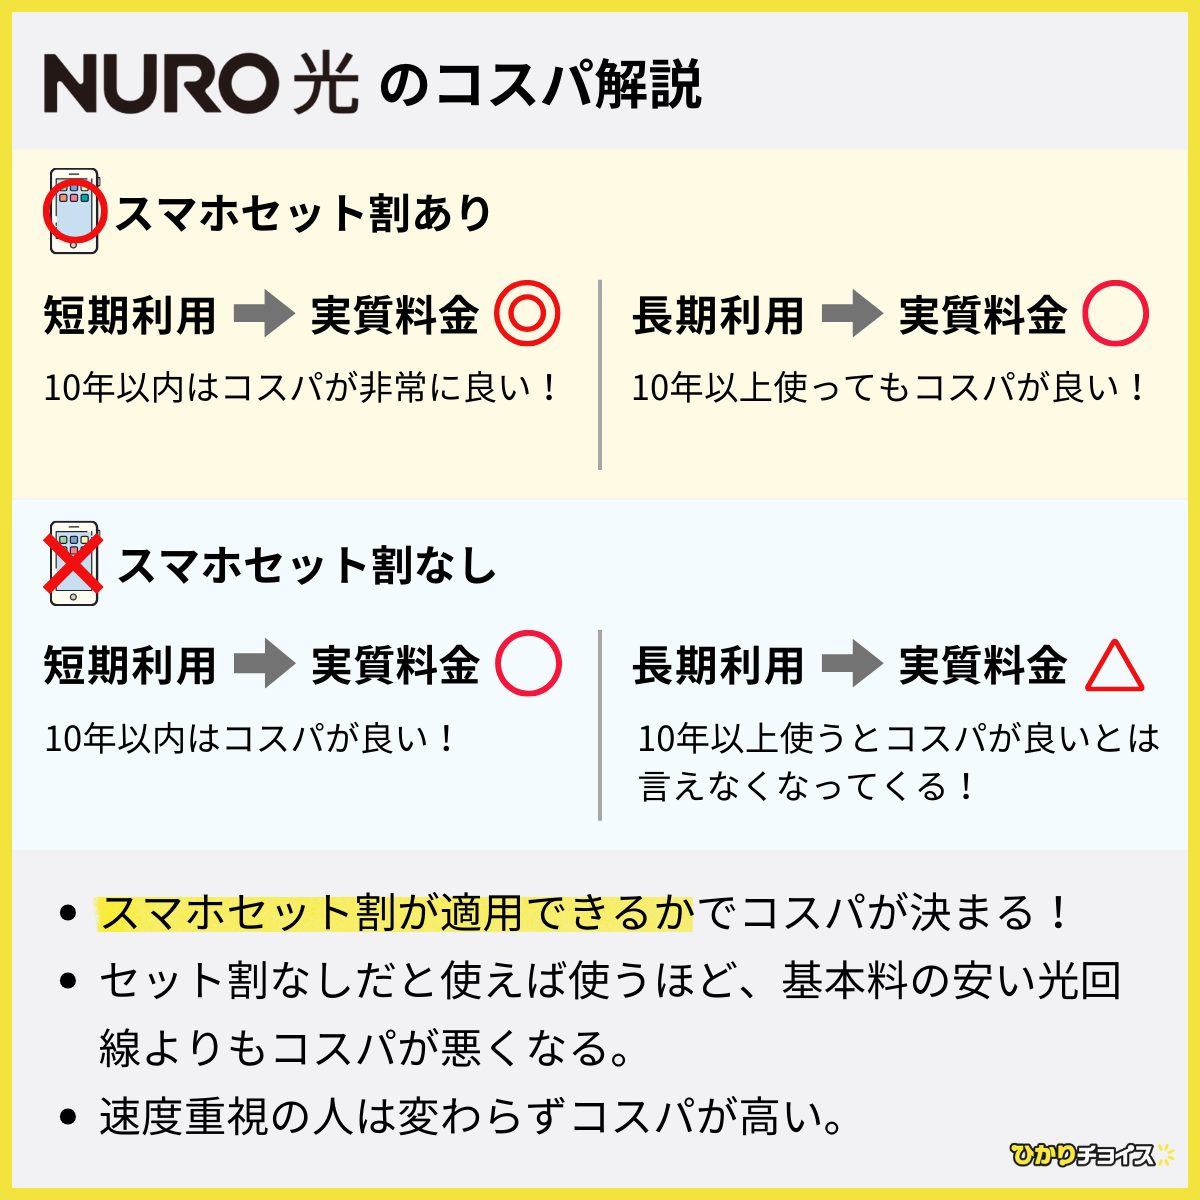 NURO光のコスパ解説